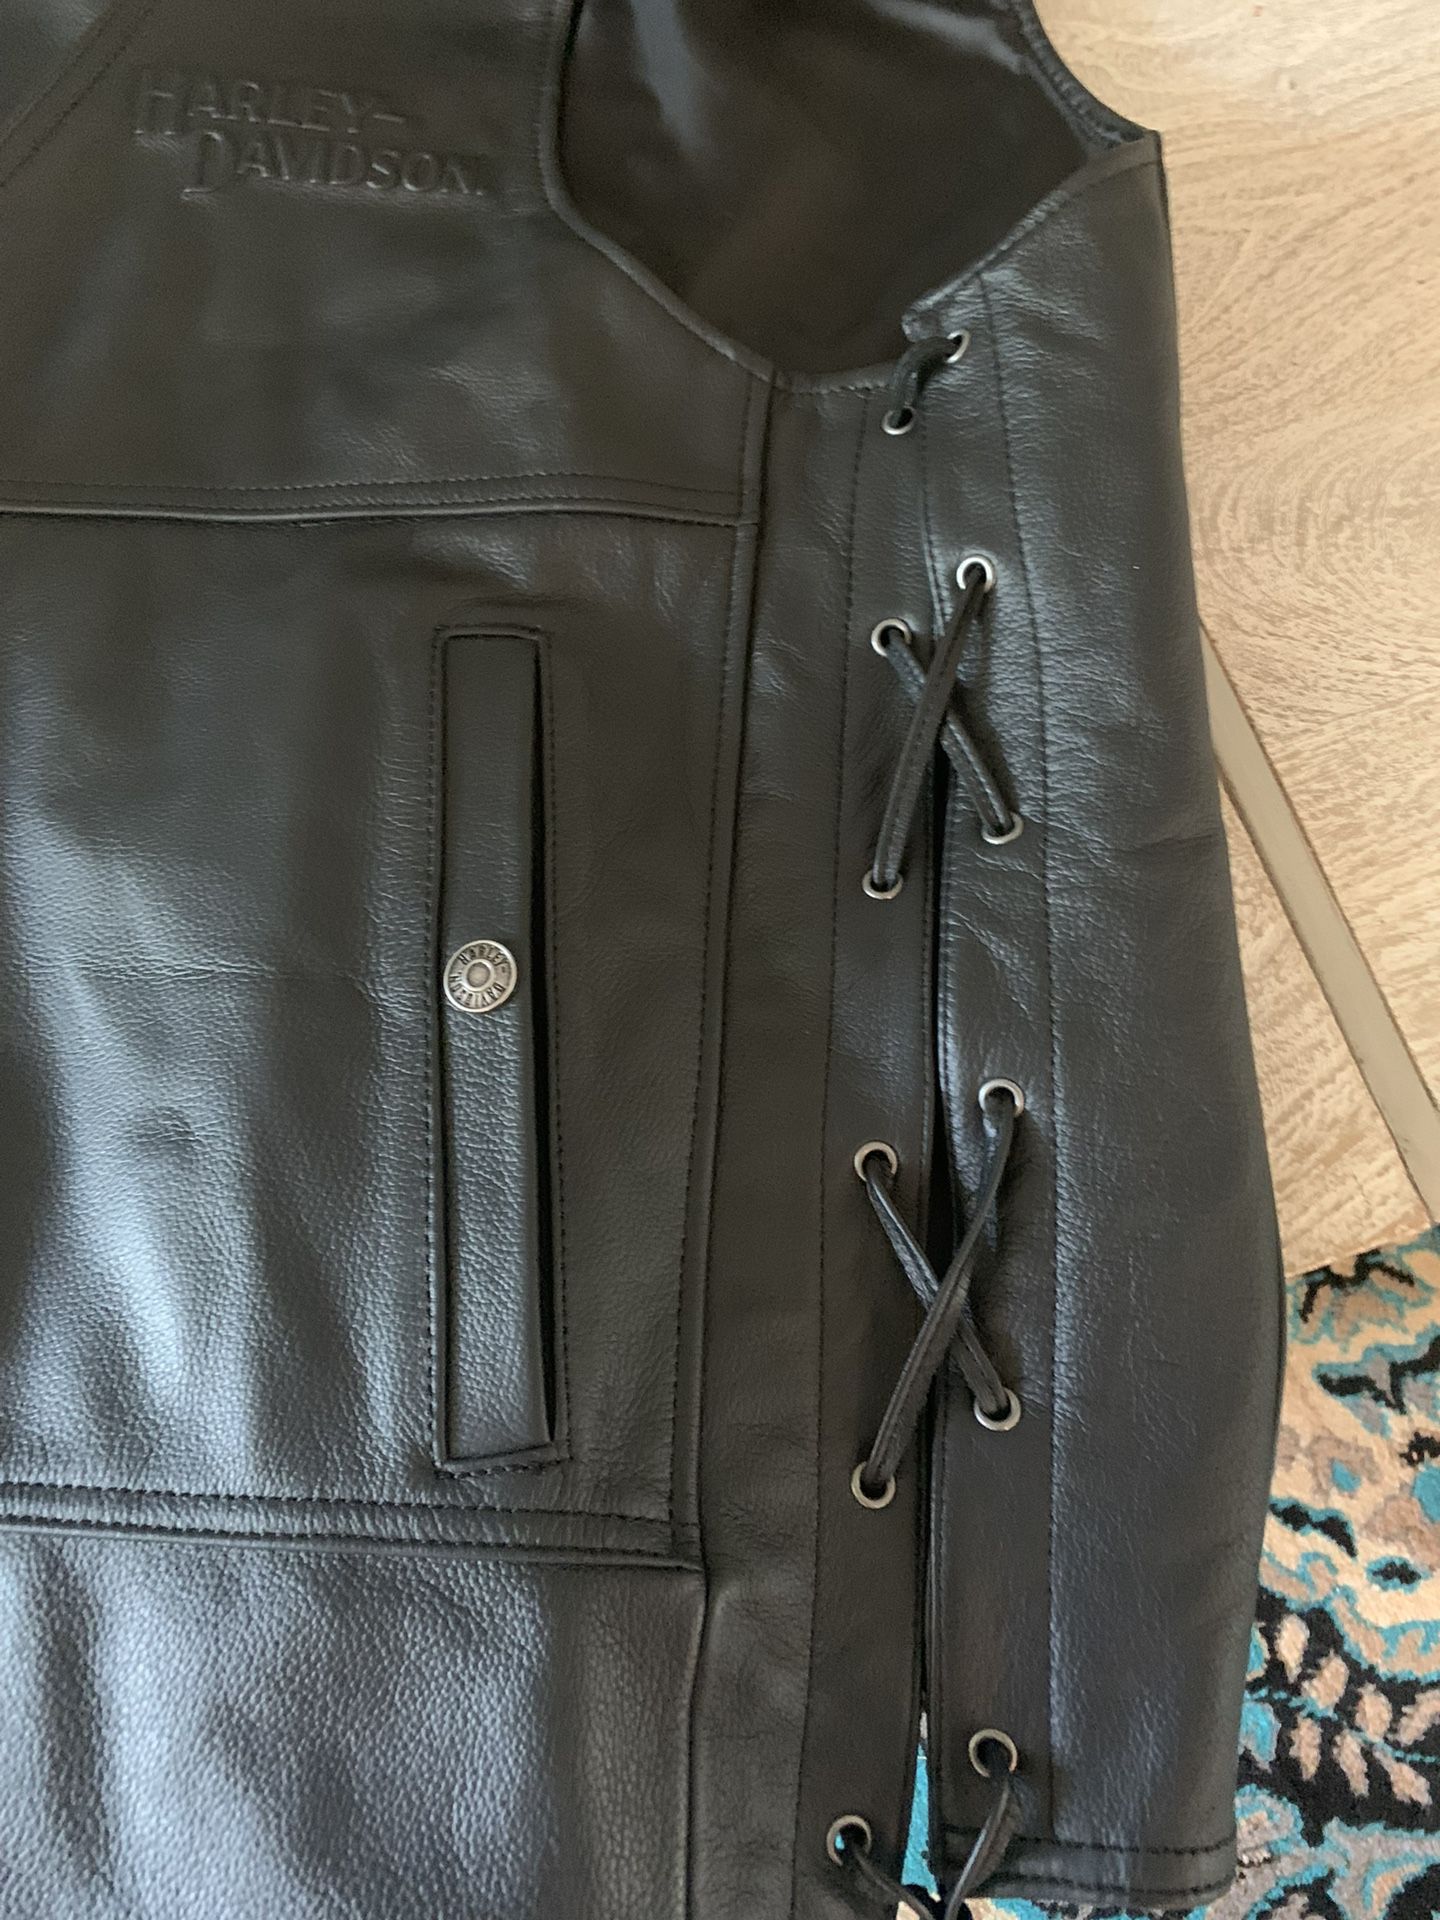 XL Leather Harley Davidson Jacket